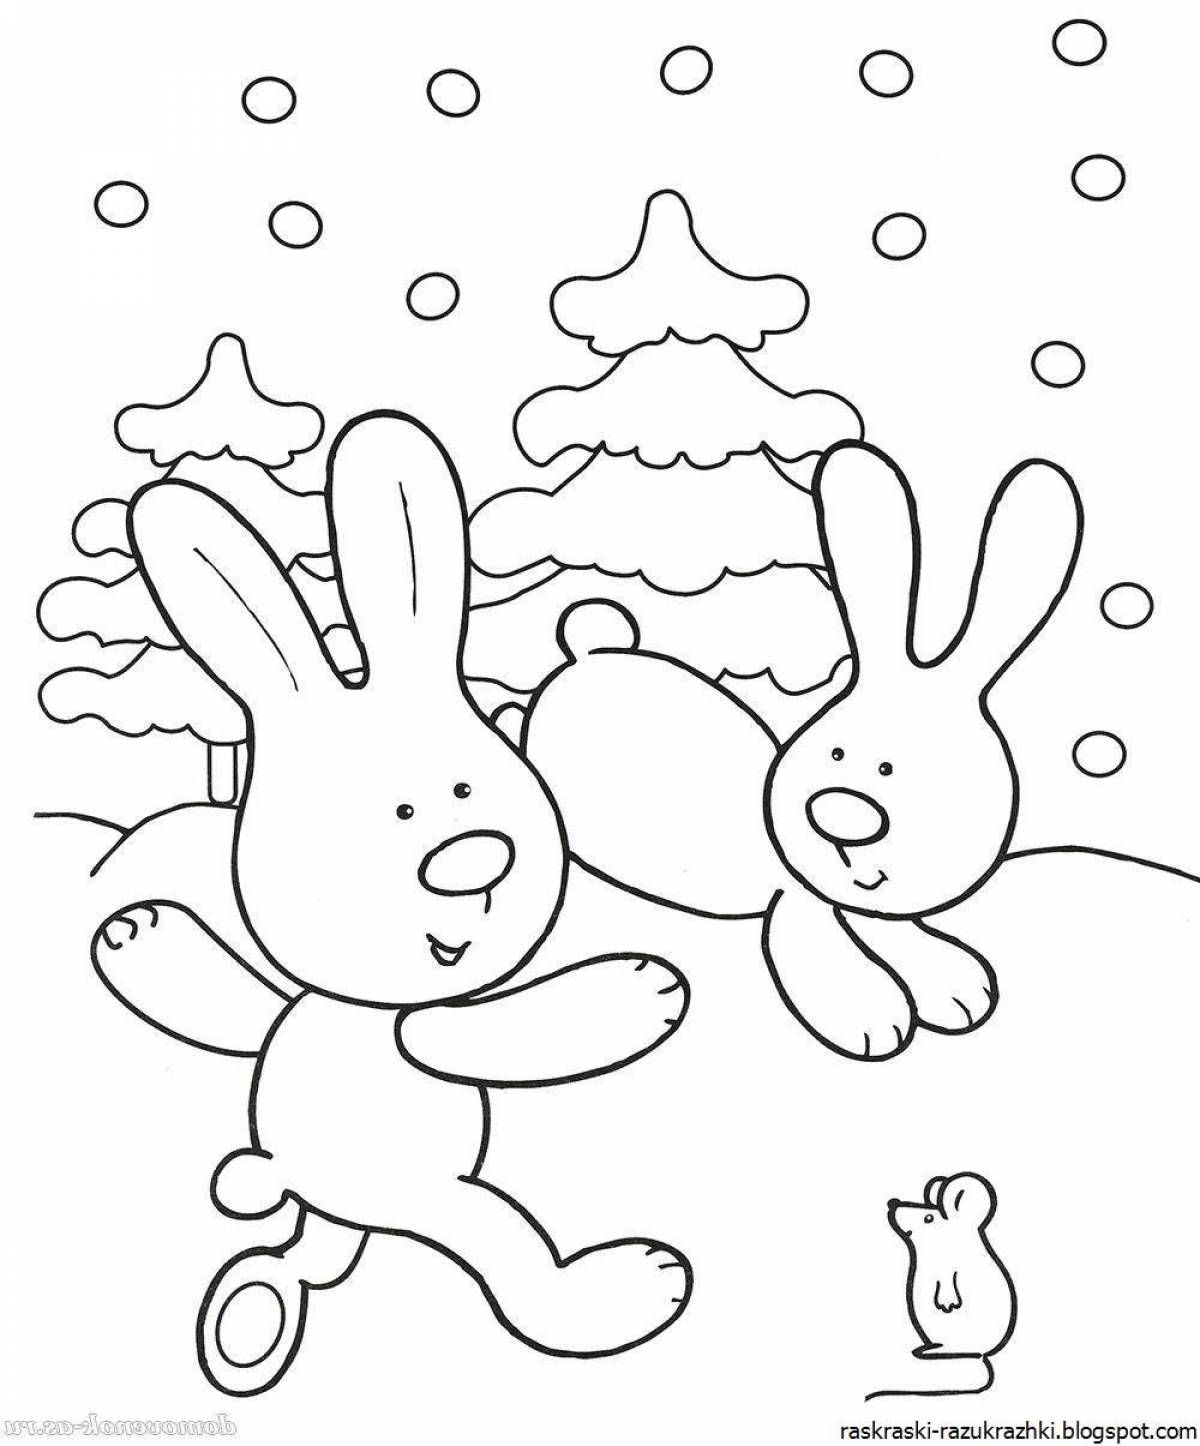 Буйный заяц раскраска для детей 3-4 лет